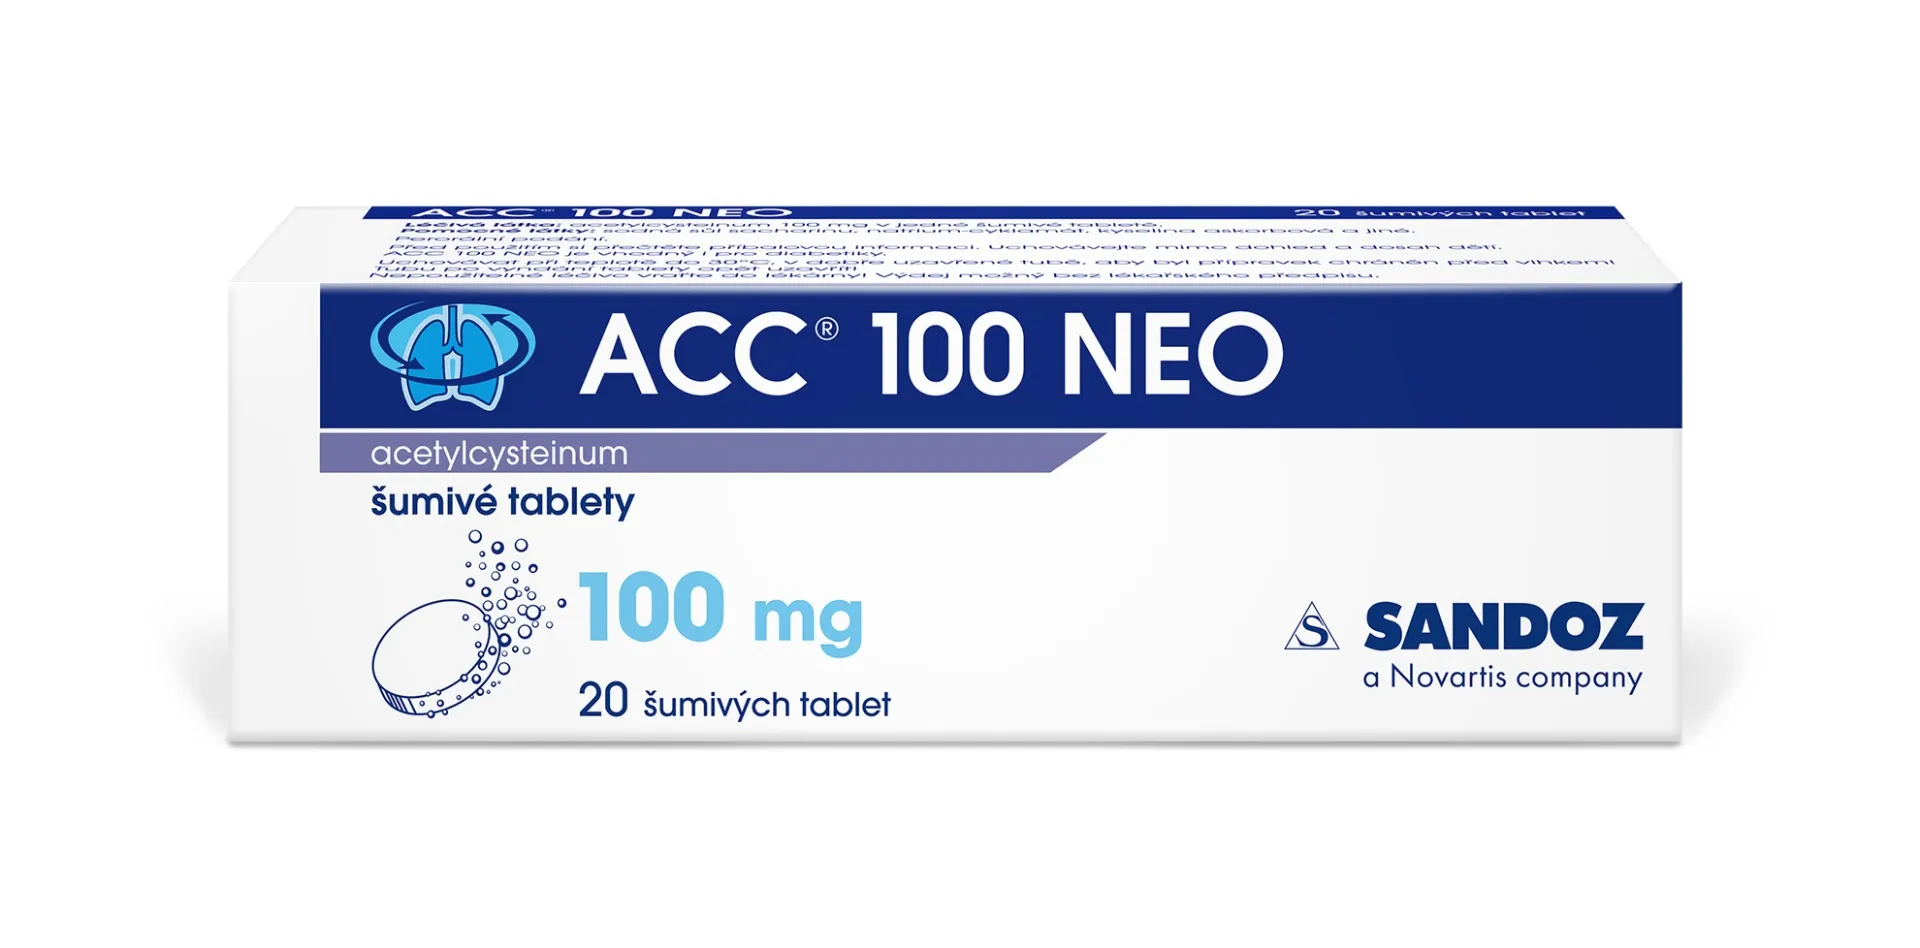 ACC 100 NEO 100 mg